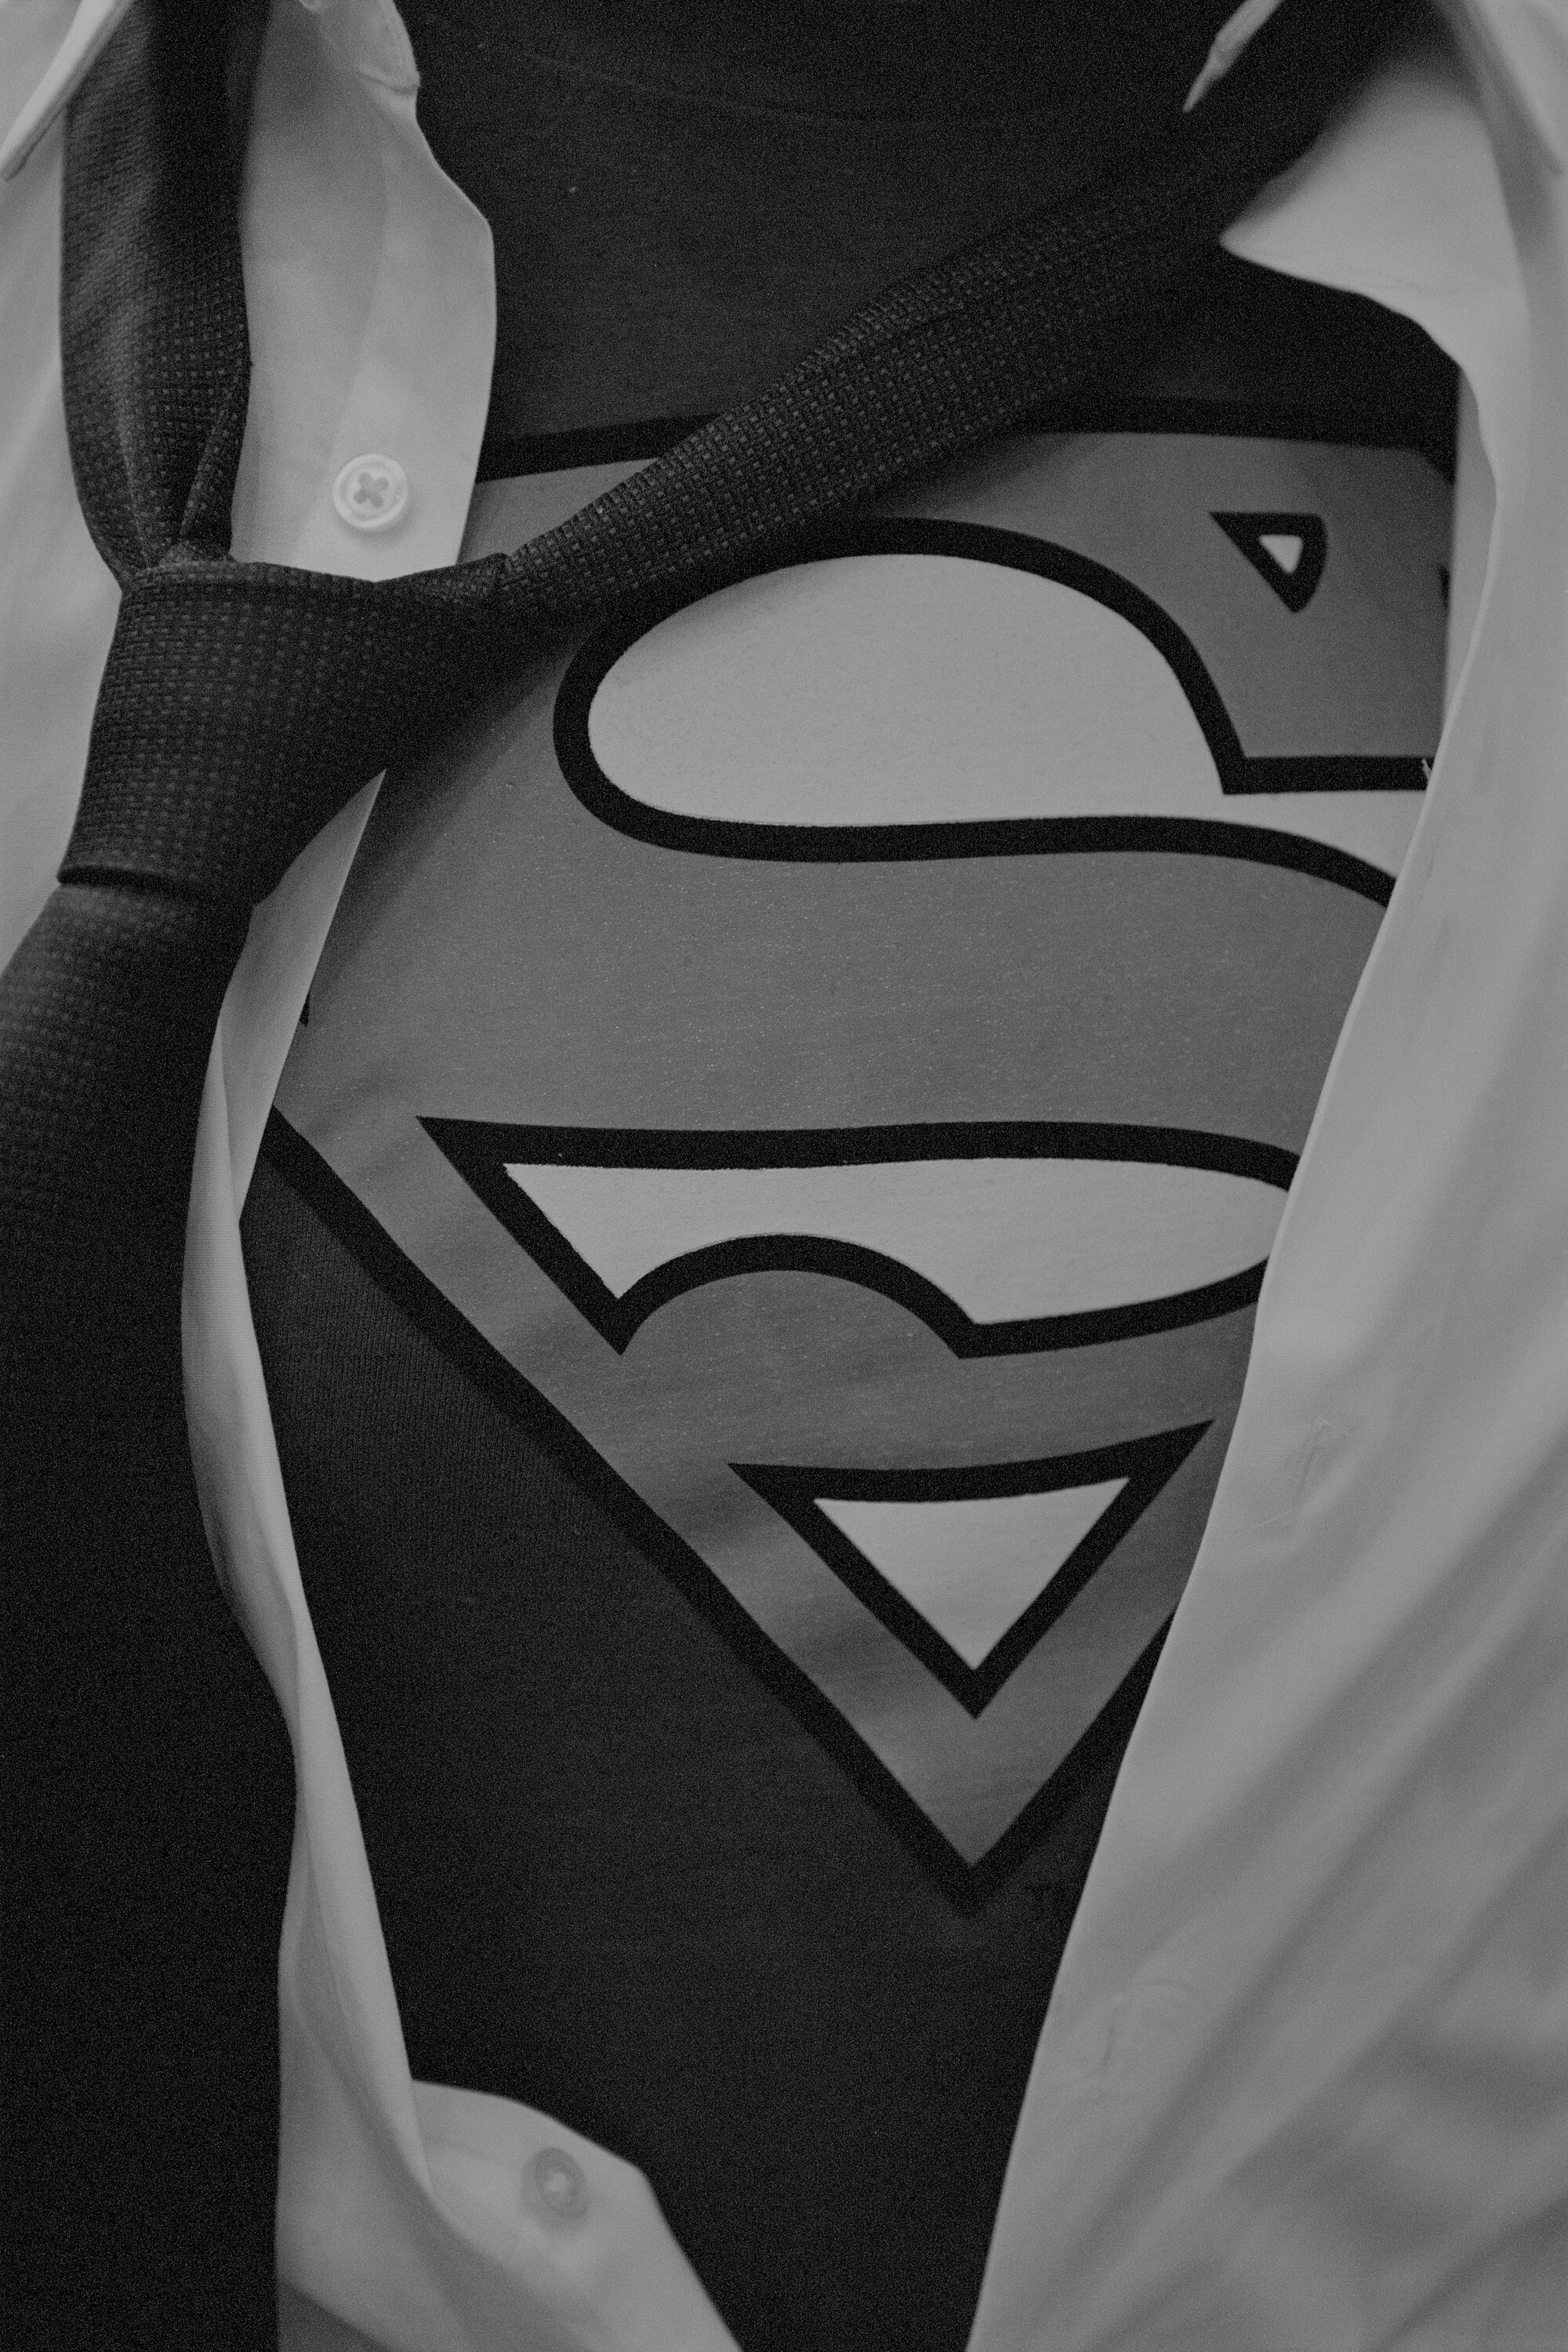  Superman in New York, NY on Oct. 13, 2012. 